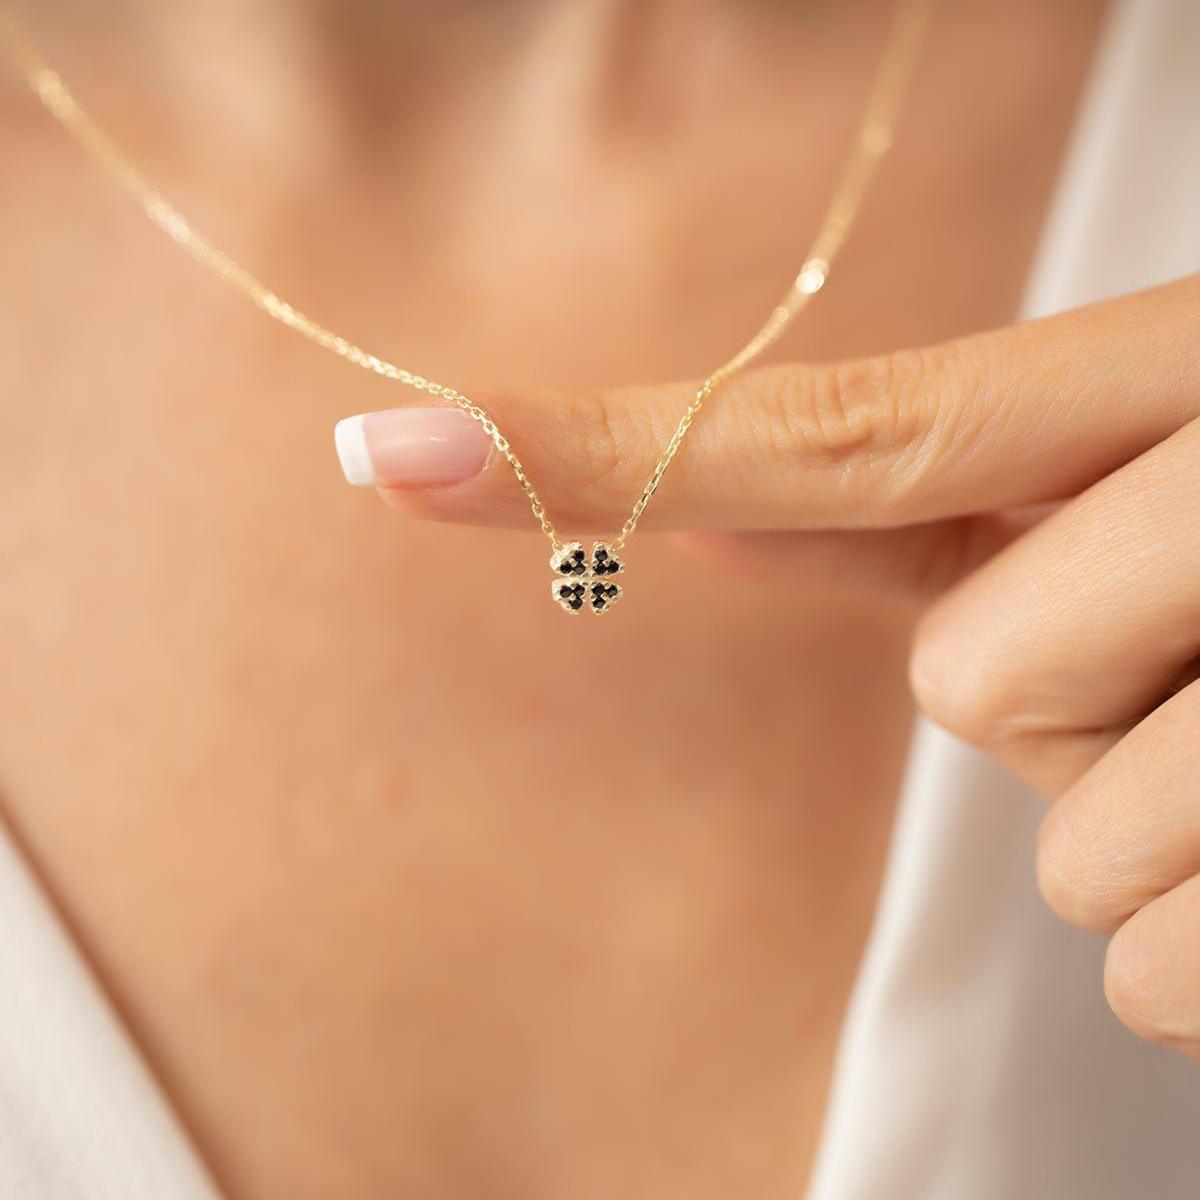 Black Clover Necklace • Clover Leaf Necklace • Black Zirconia Necklace - Trending Silver Gifts